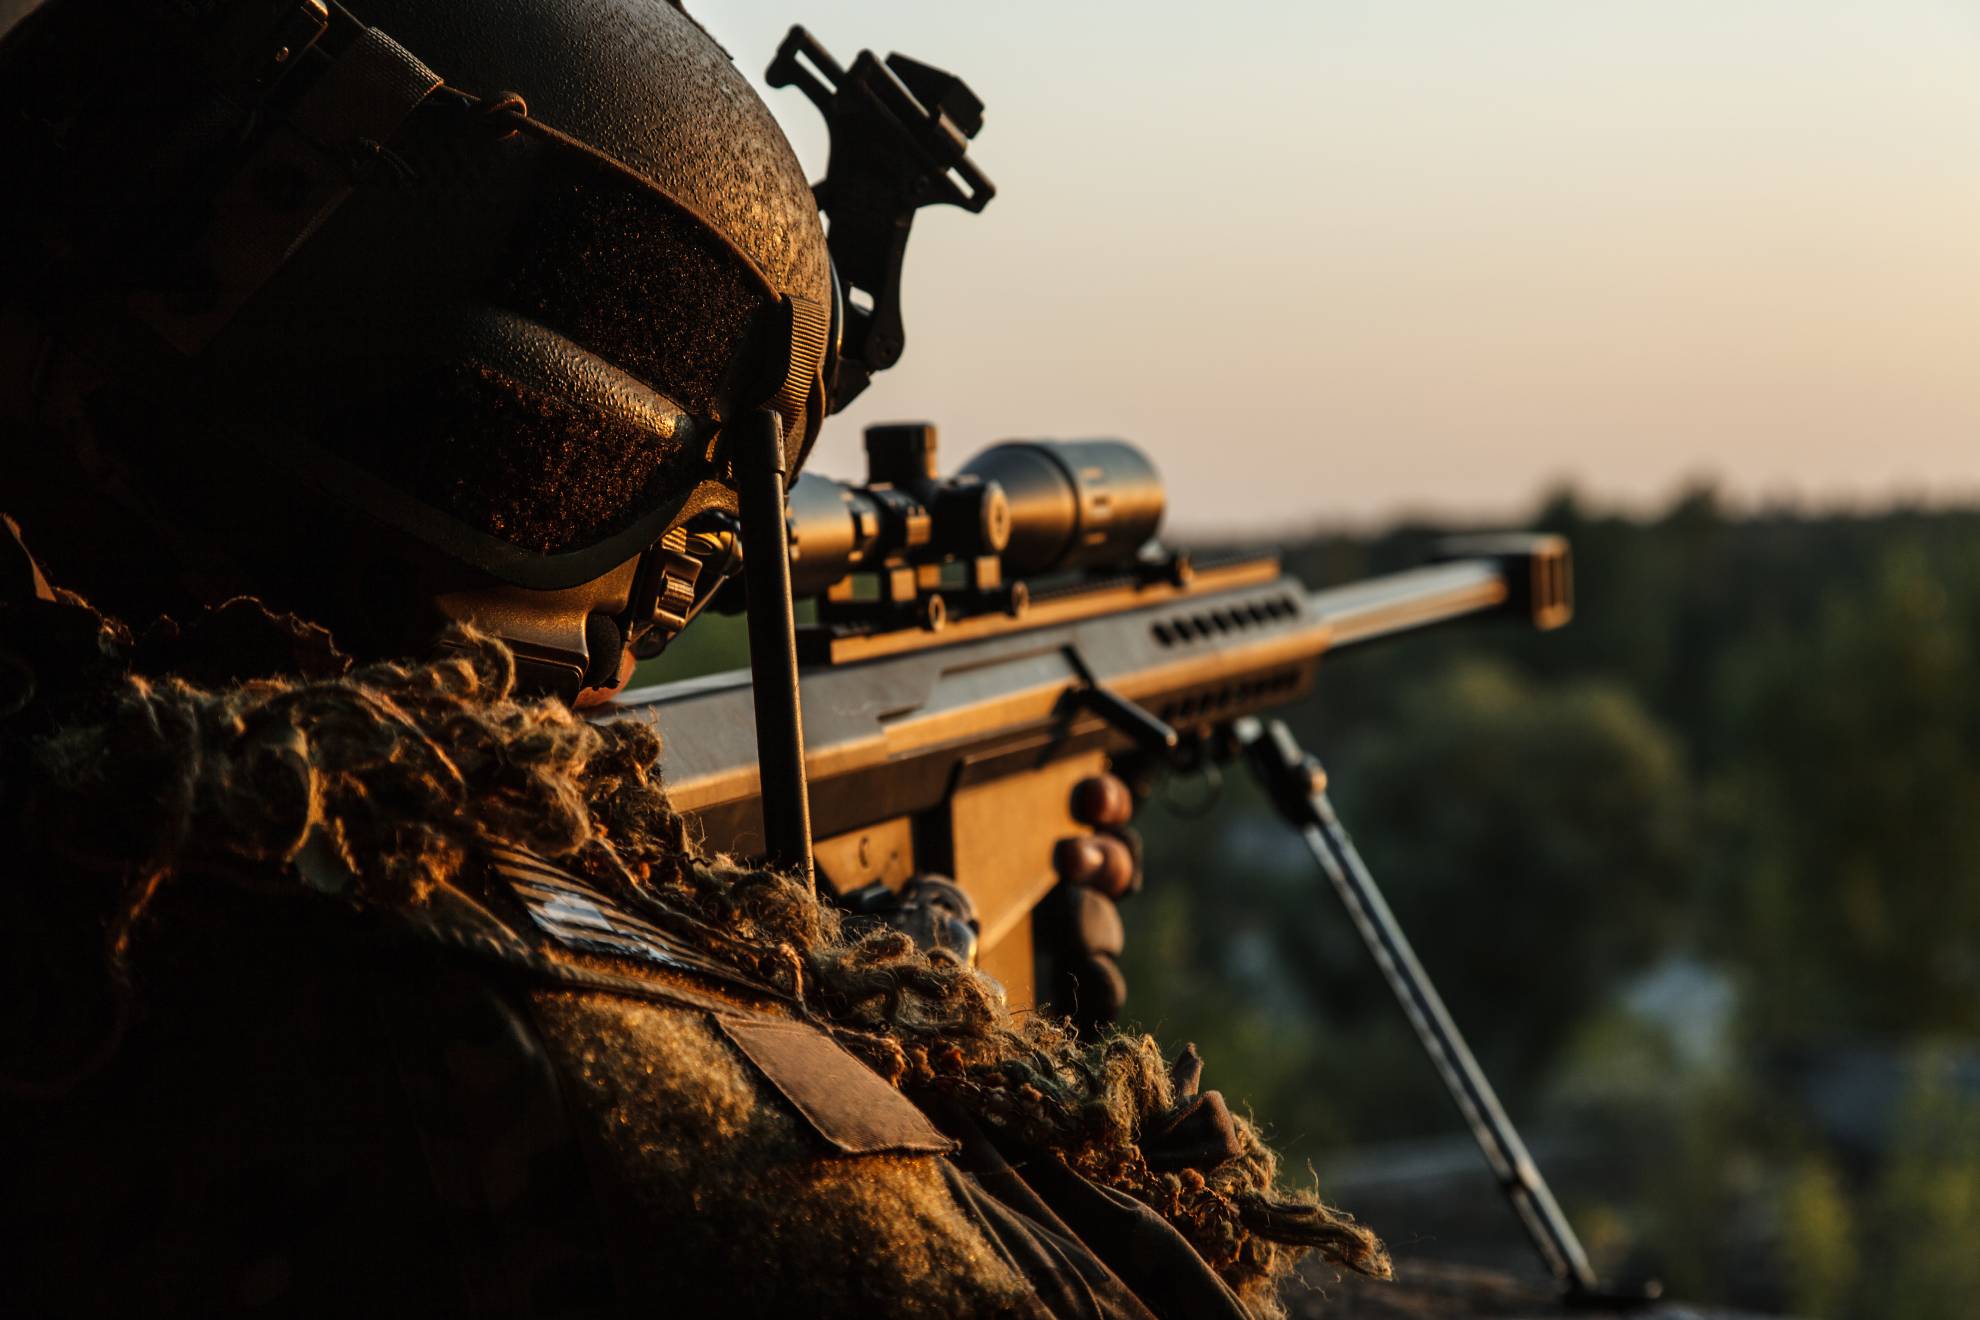 army-sniper-with-large-caliber-rifle-2021-08-26-17-01-53-utc (1)